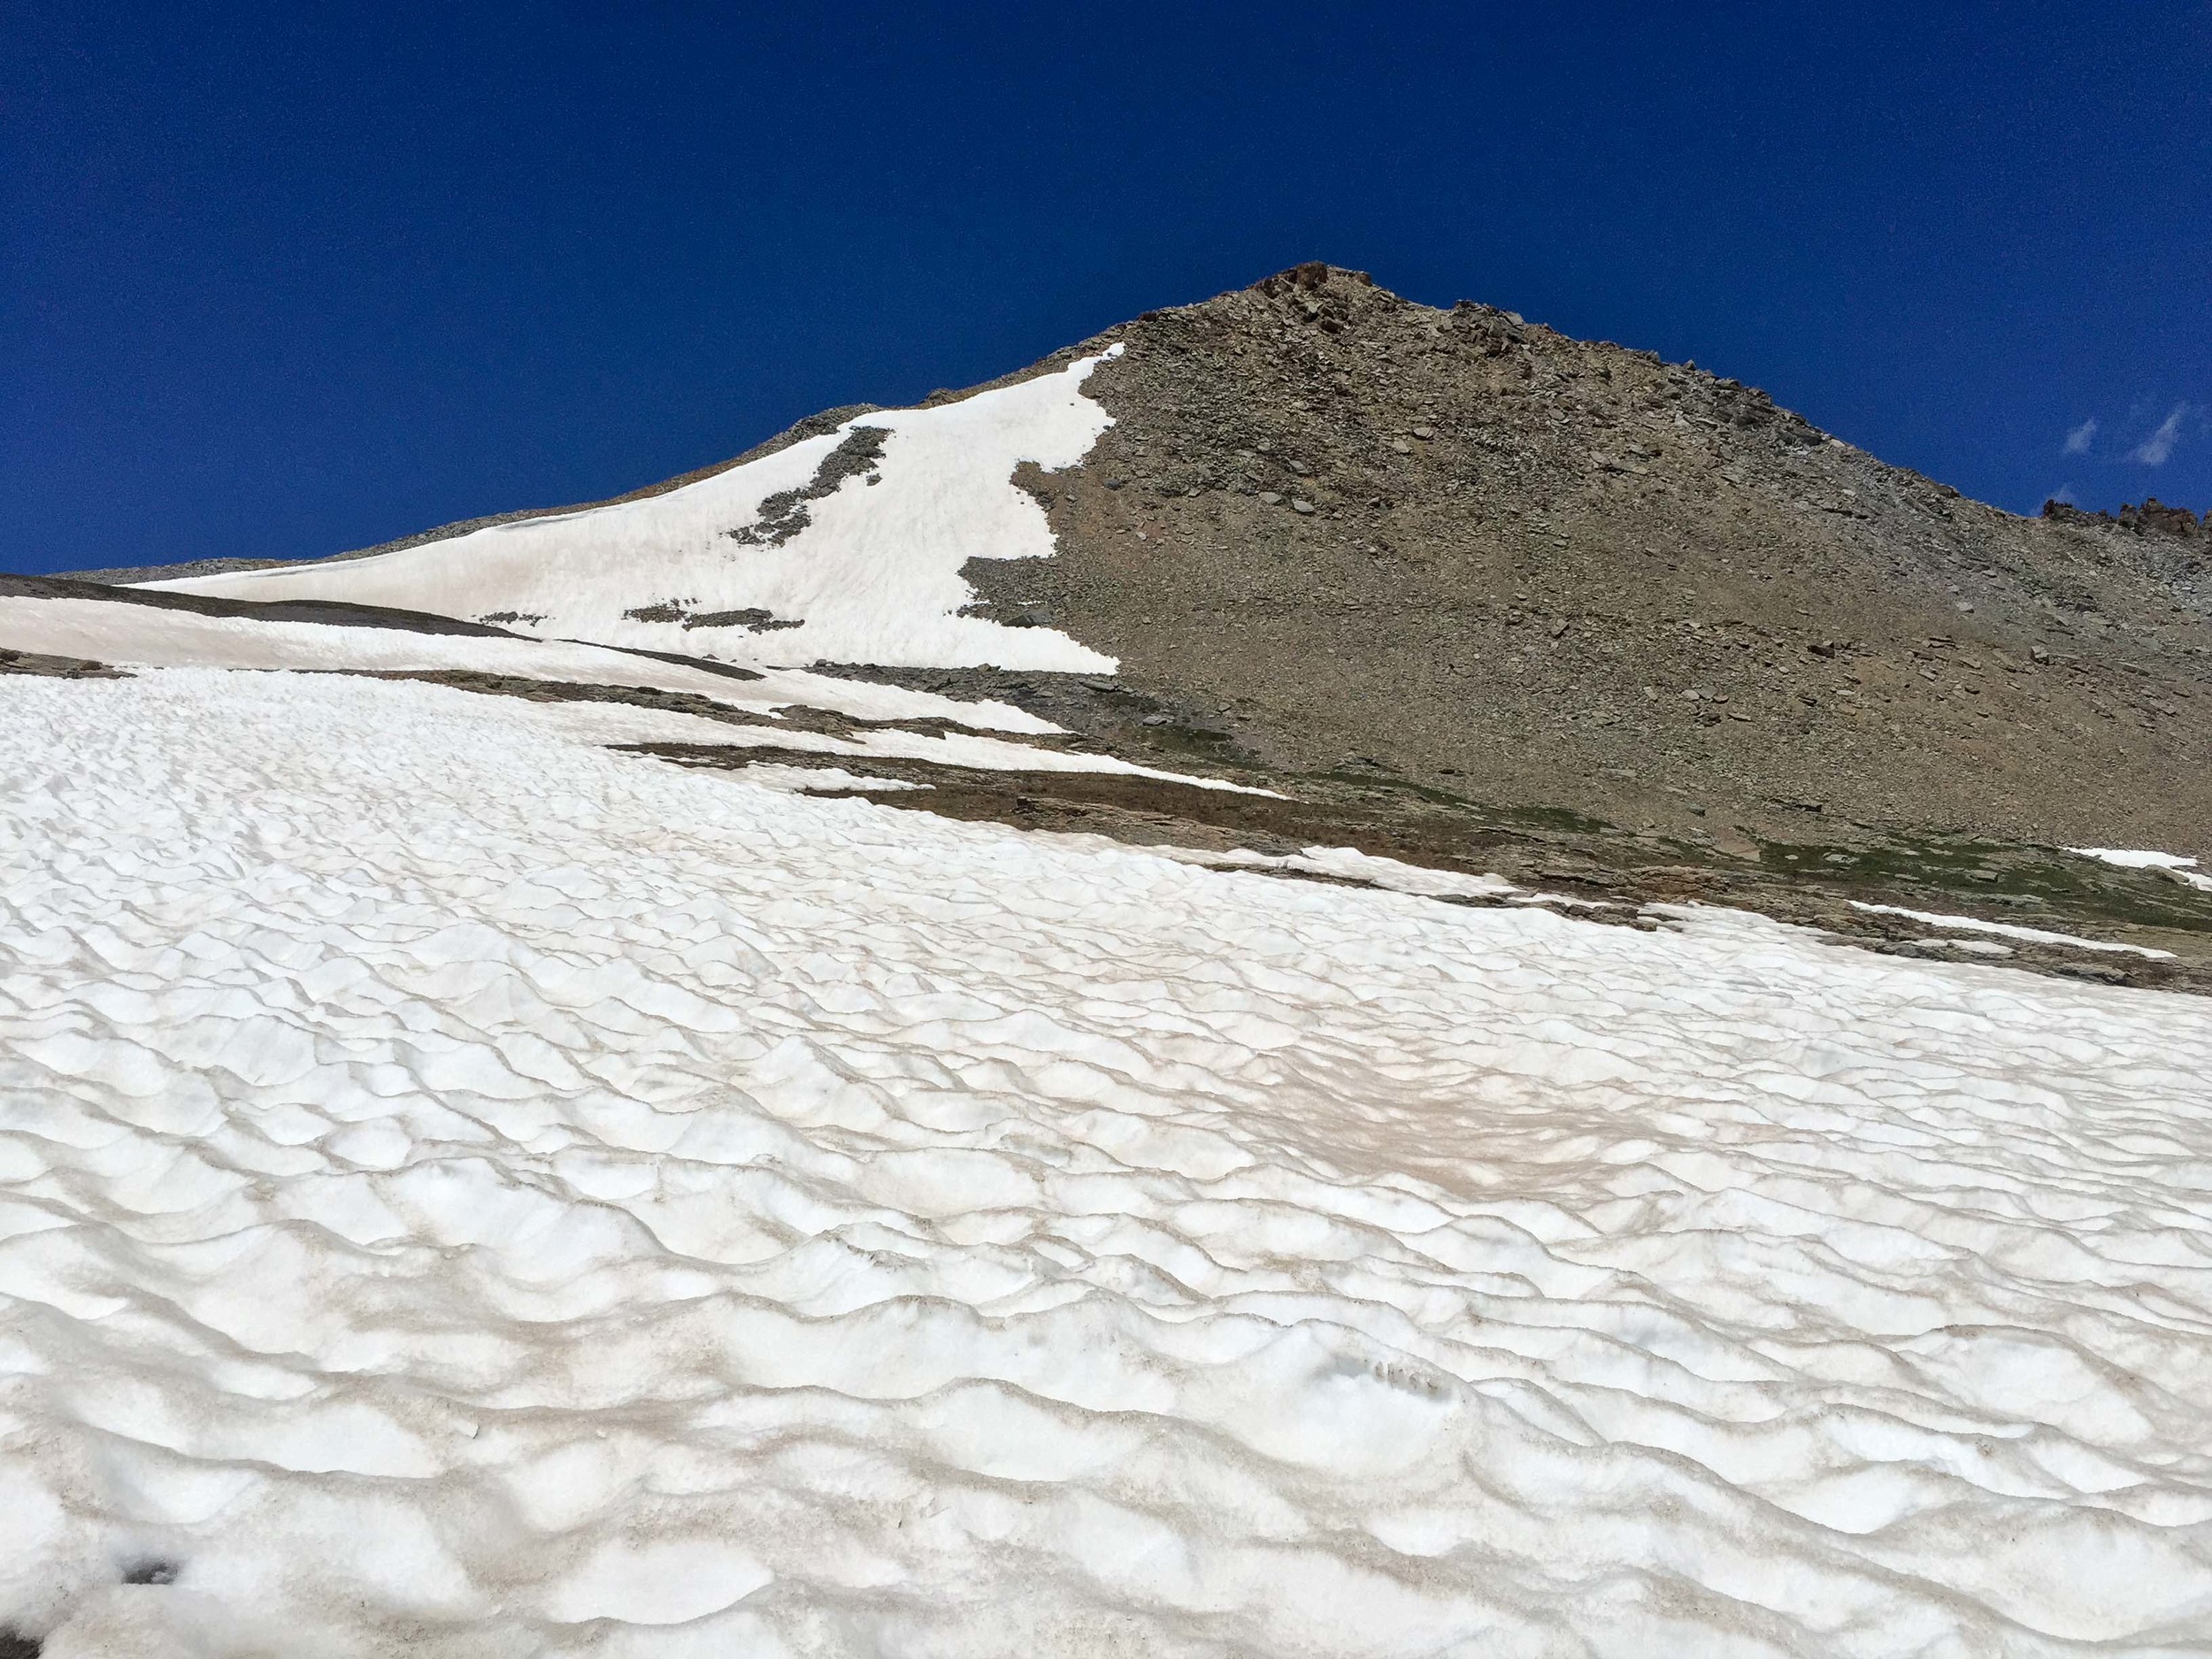 Still more snowfields to cross before reaching Columbine Pass